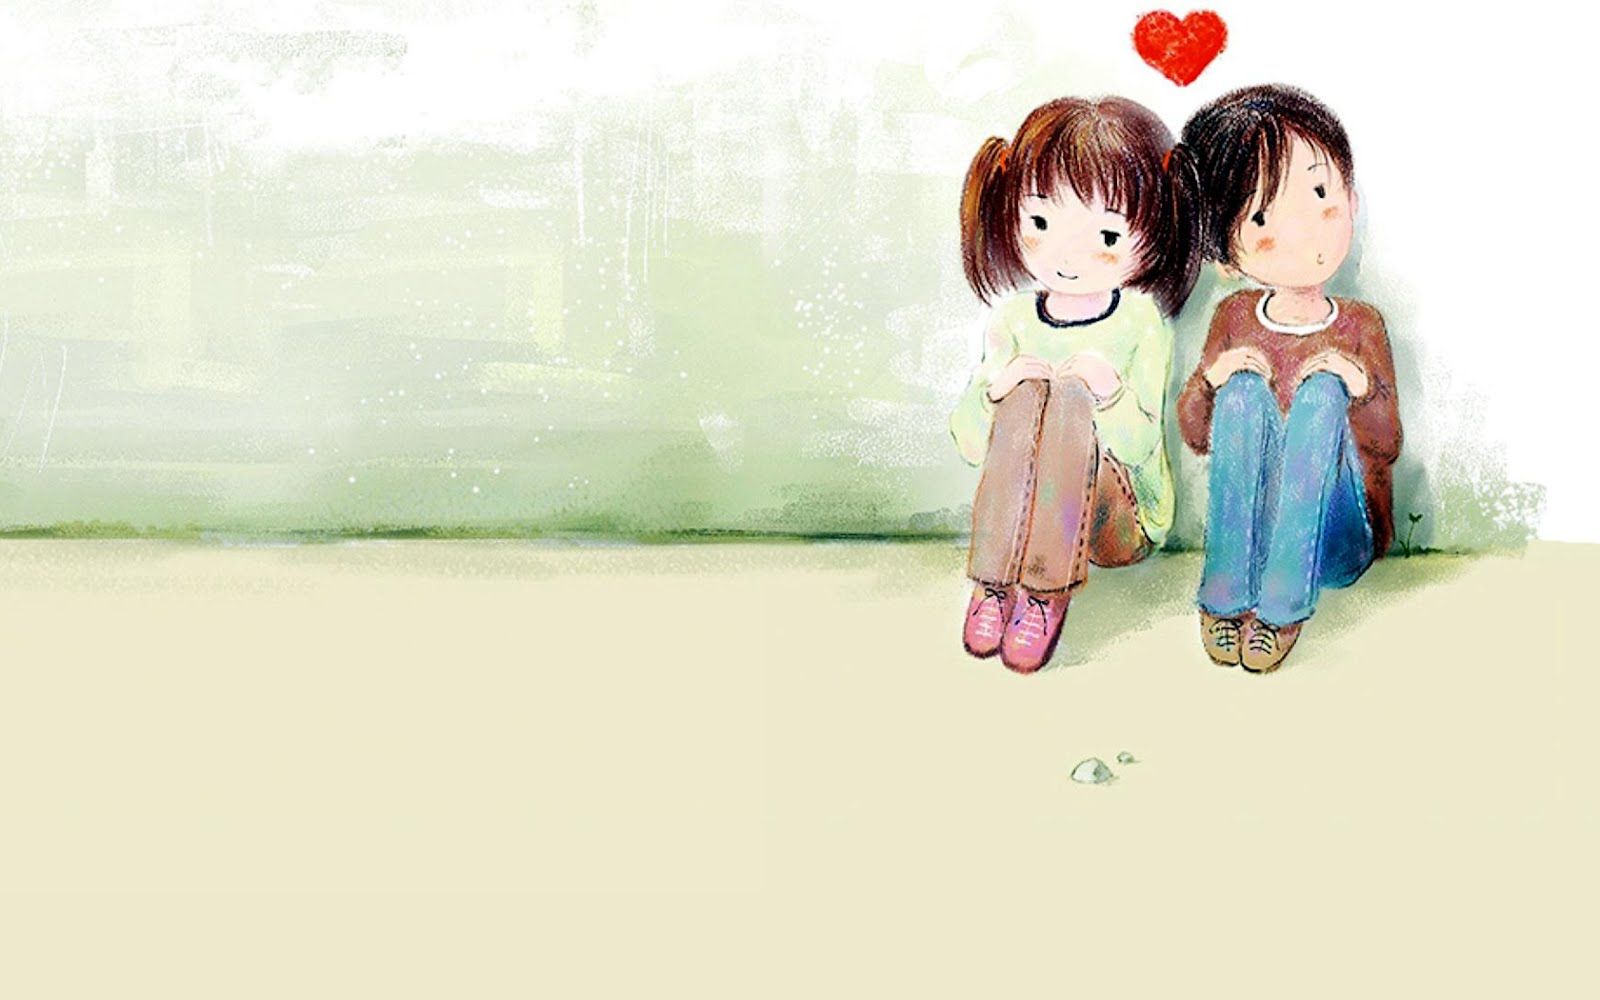 Valentine Wallpaper: Romantic Couple Wallpaper. Romantic anime, Romantic wallpaper, Cute couple picture cartoon